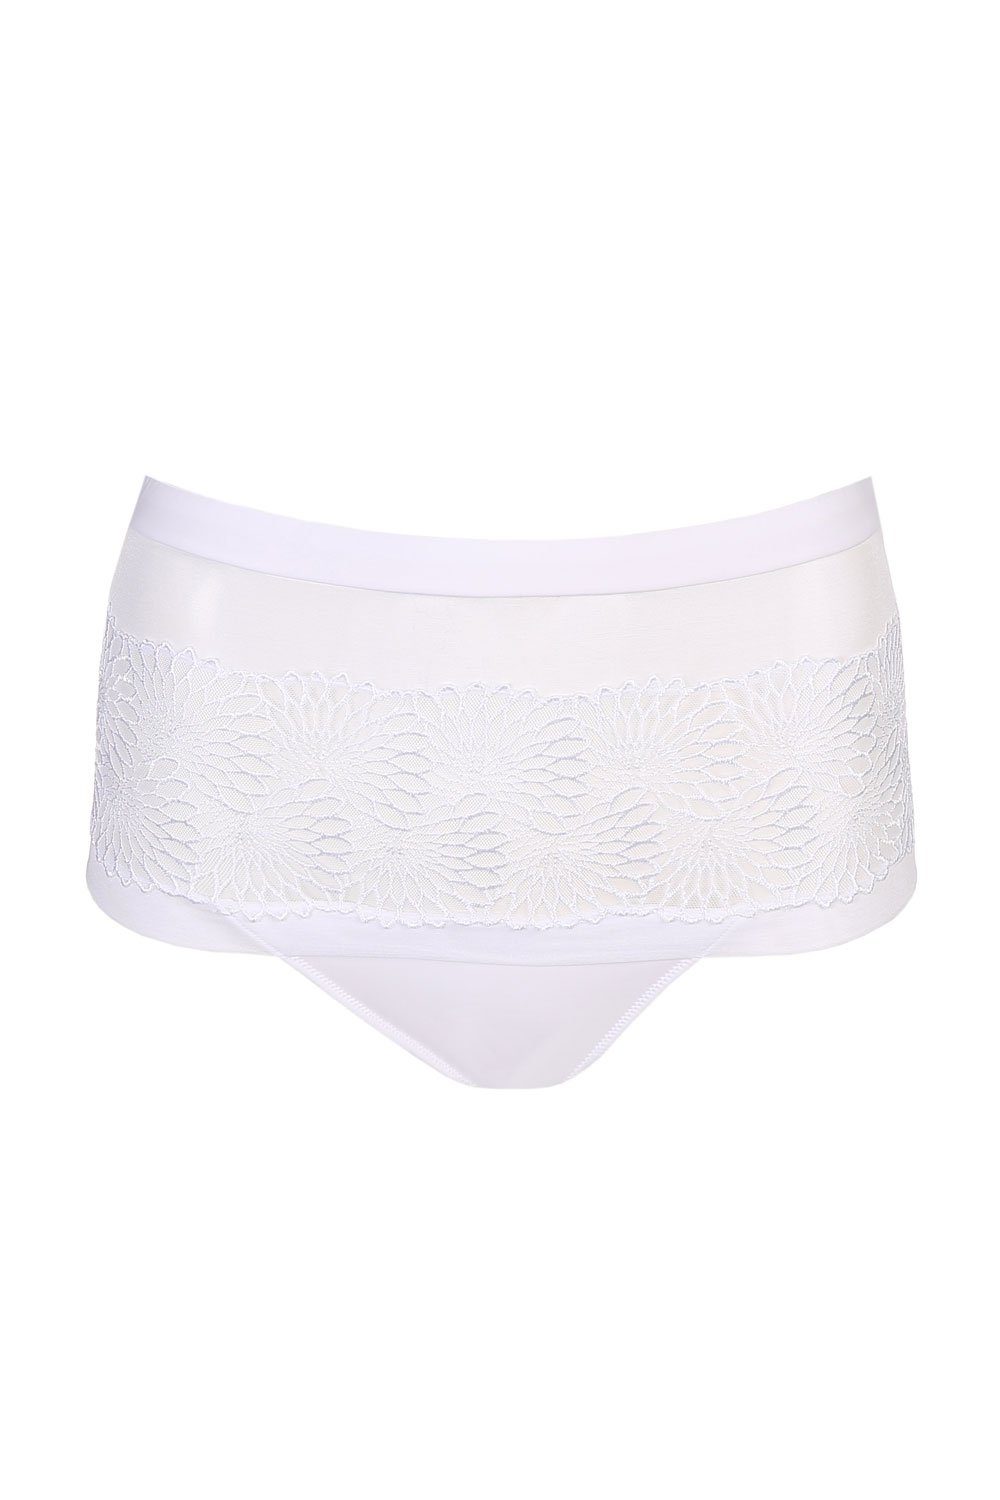 PrimaDonna Panty Hotpants 0563182 white